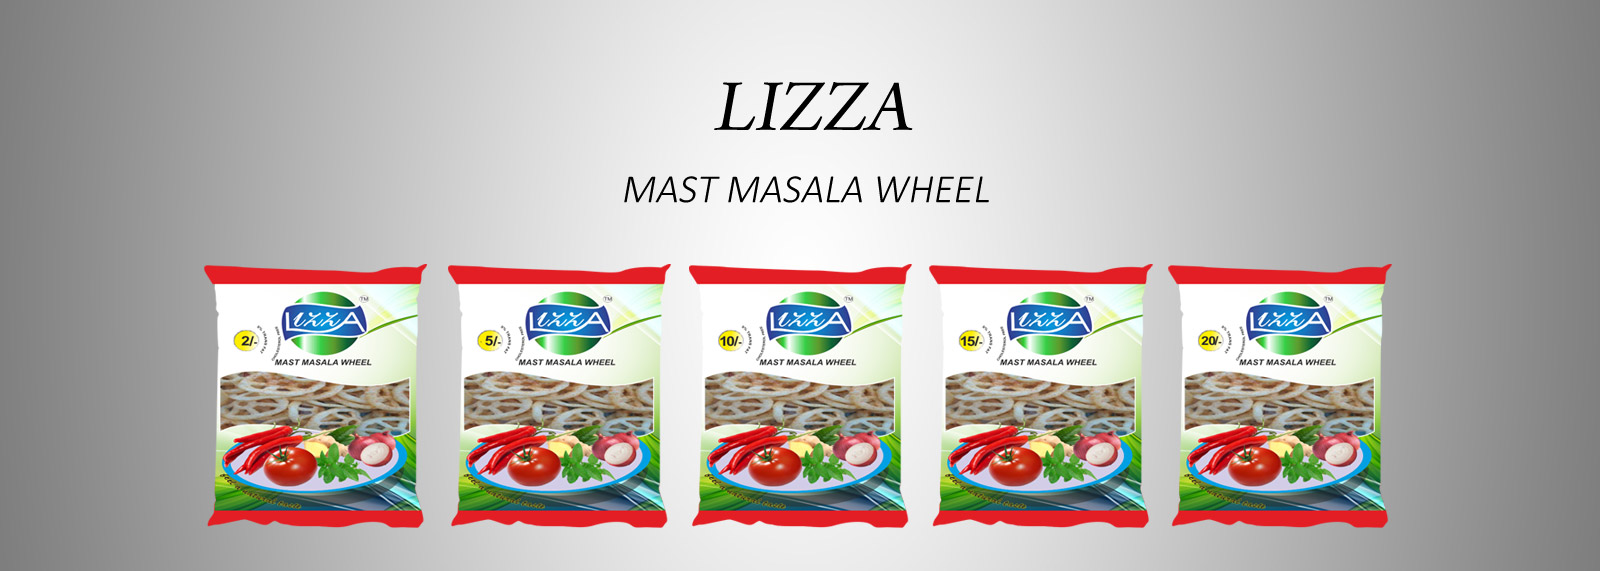 Lizza mast masala wheel